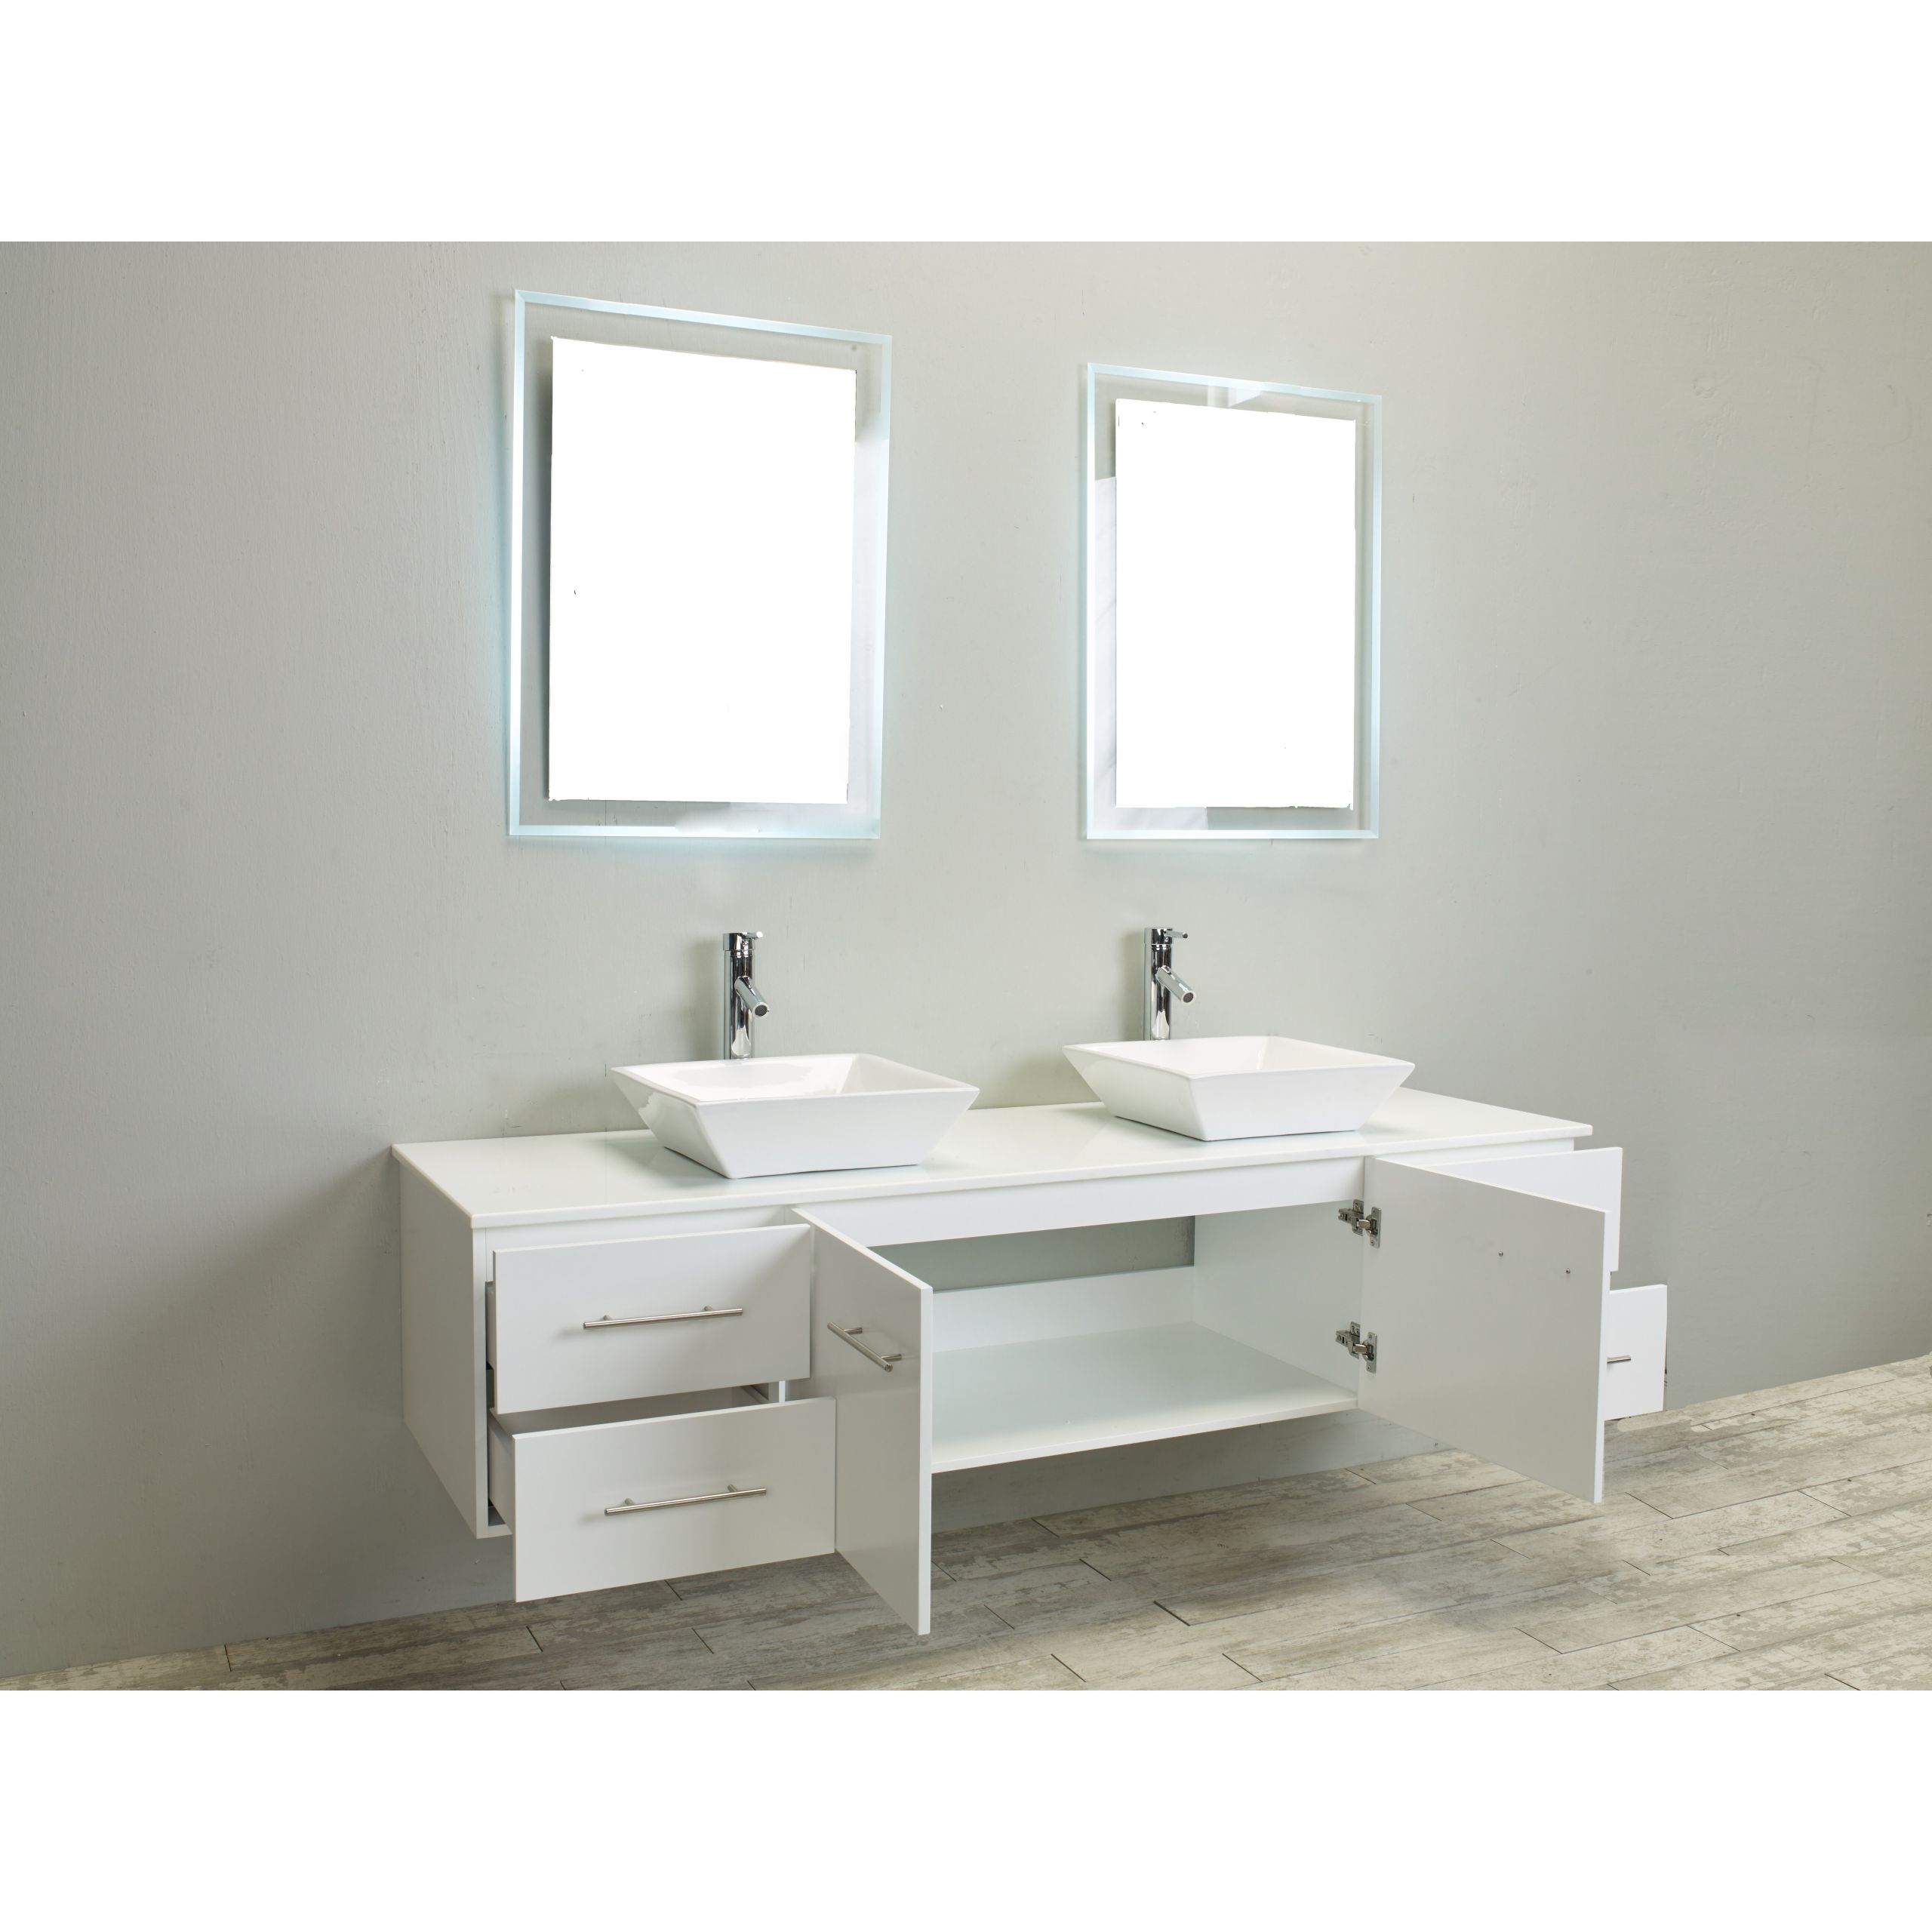 72 Double Sink Bathroom Vanity
 Totti Wave 72 Inch White Modern Double Sink Bathroom